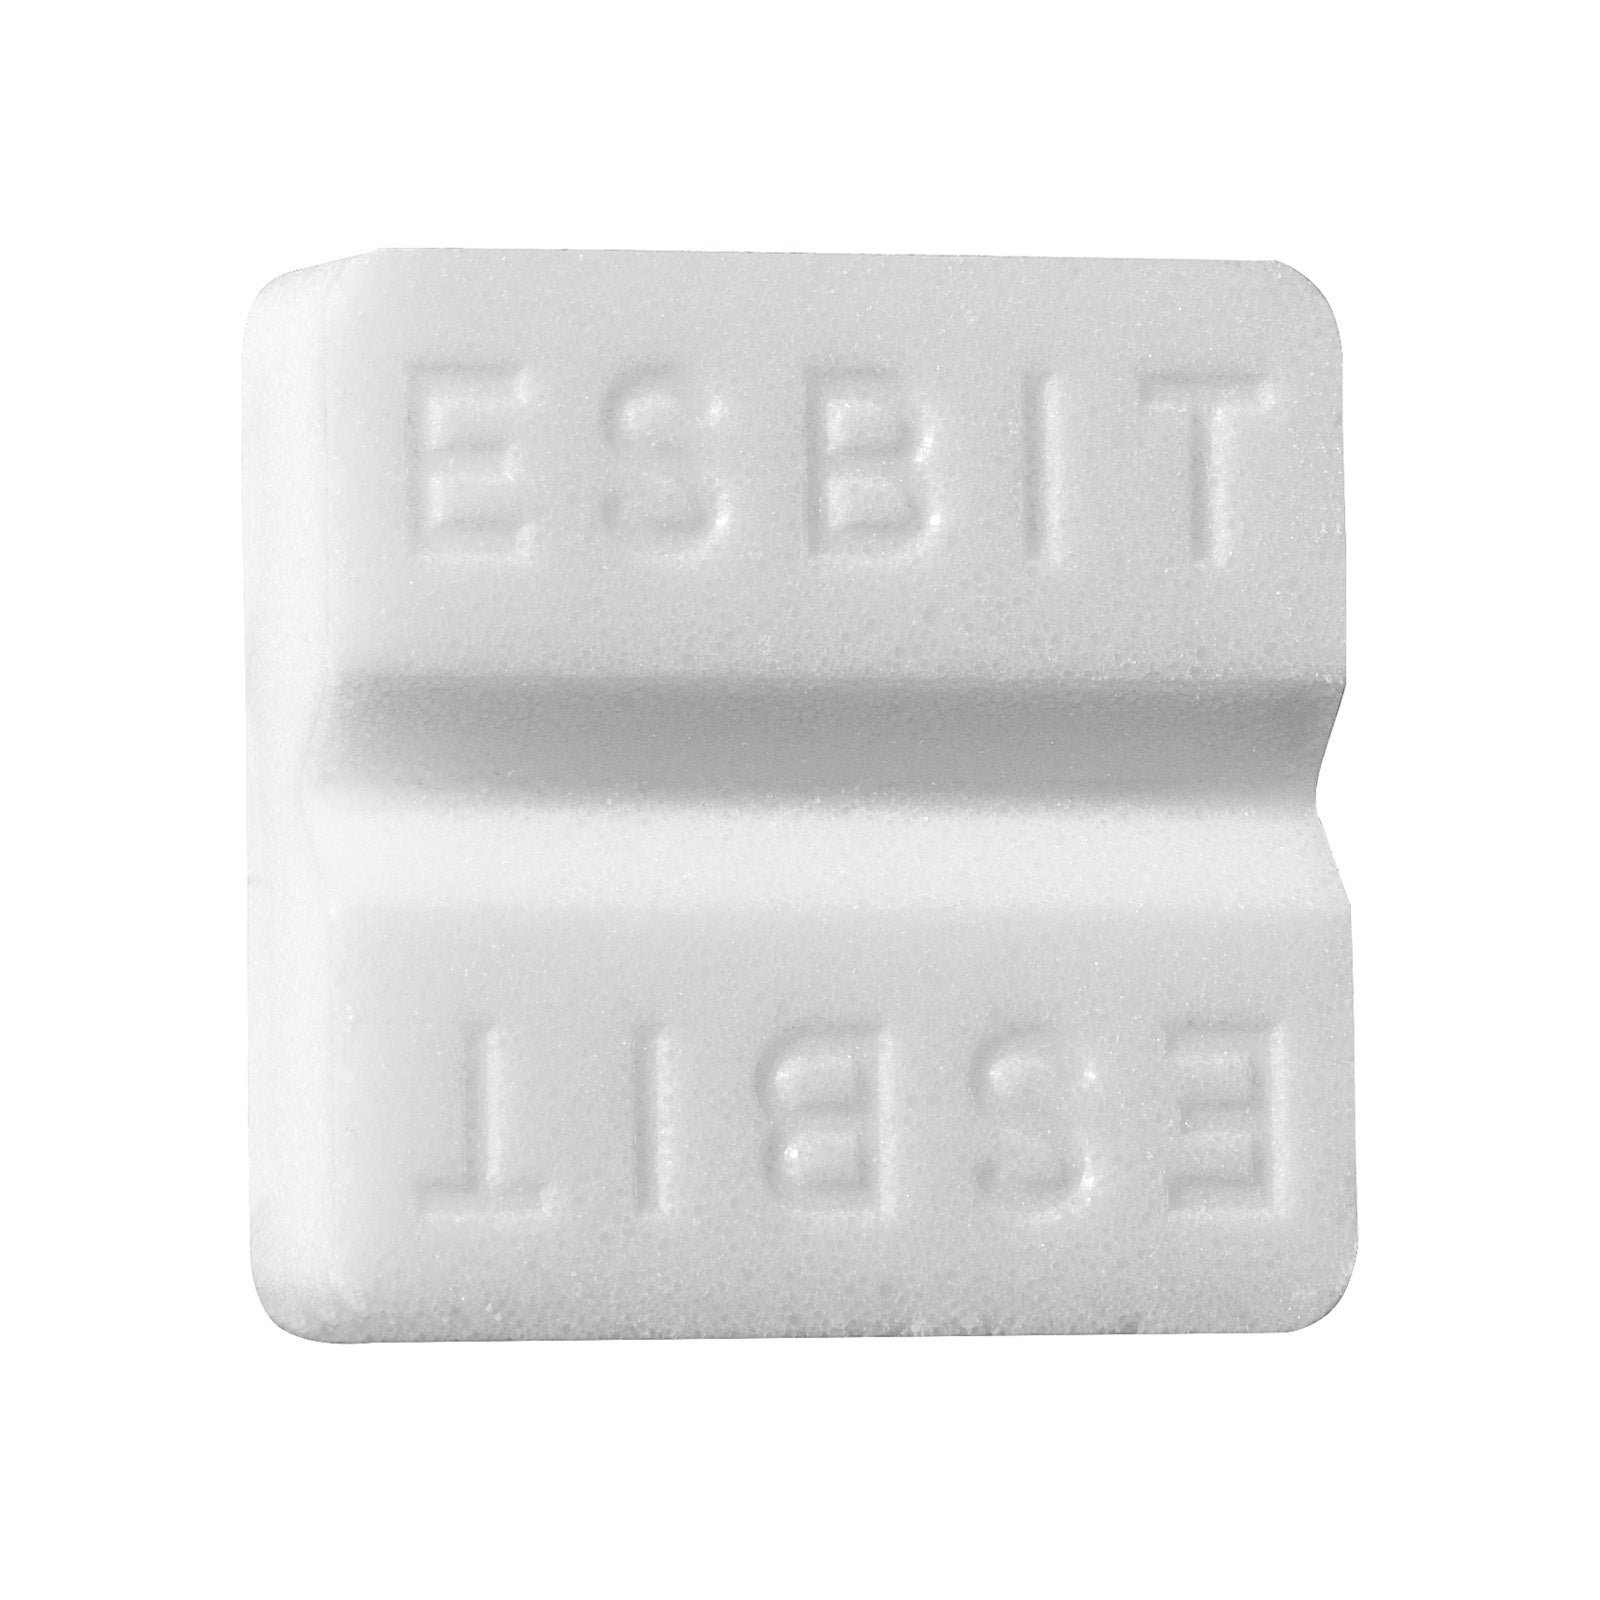 ESBIT Solid Fuel Tabs (8-pack)